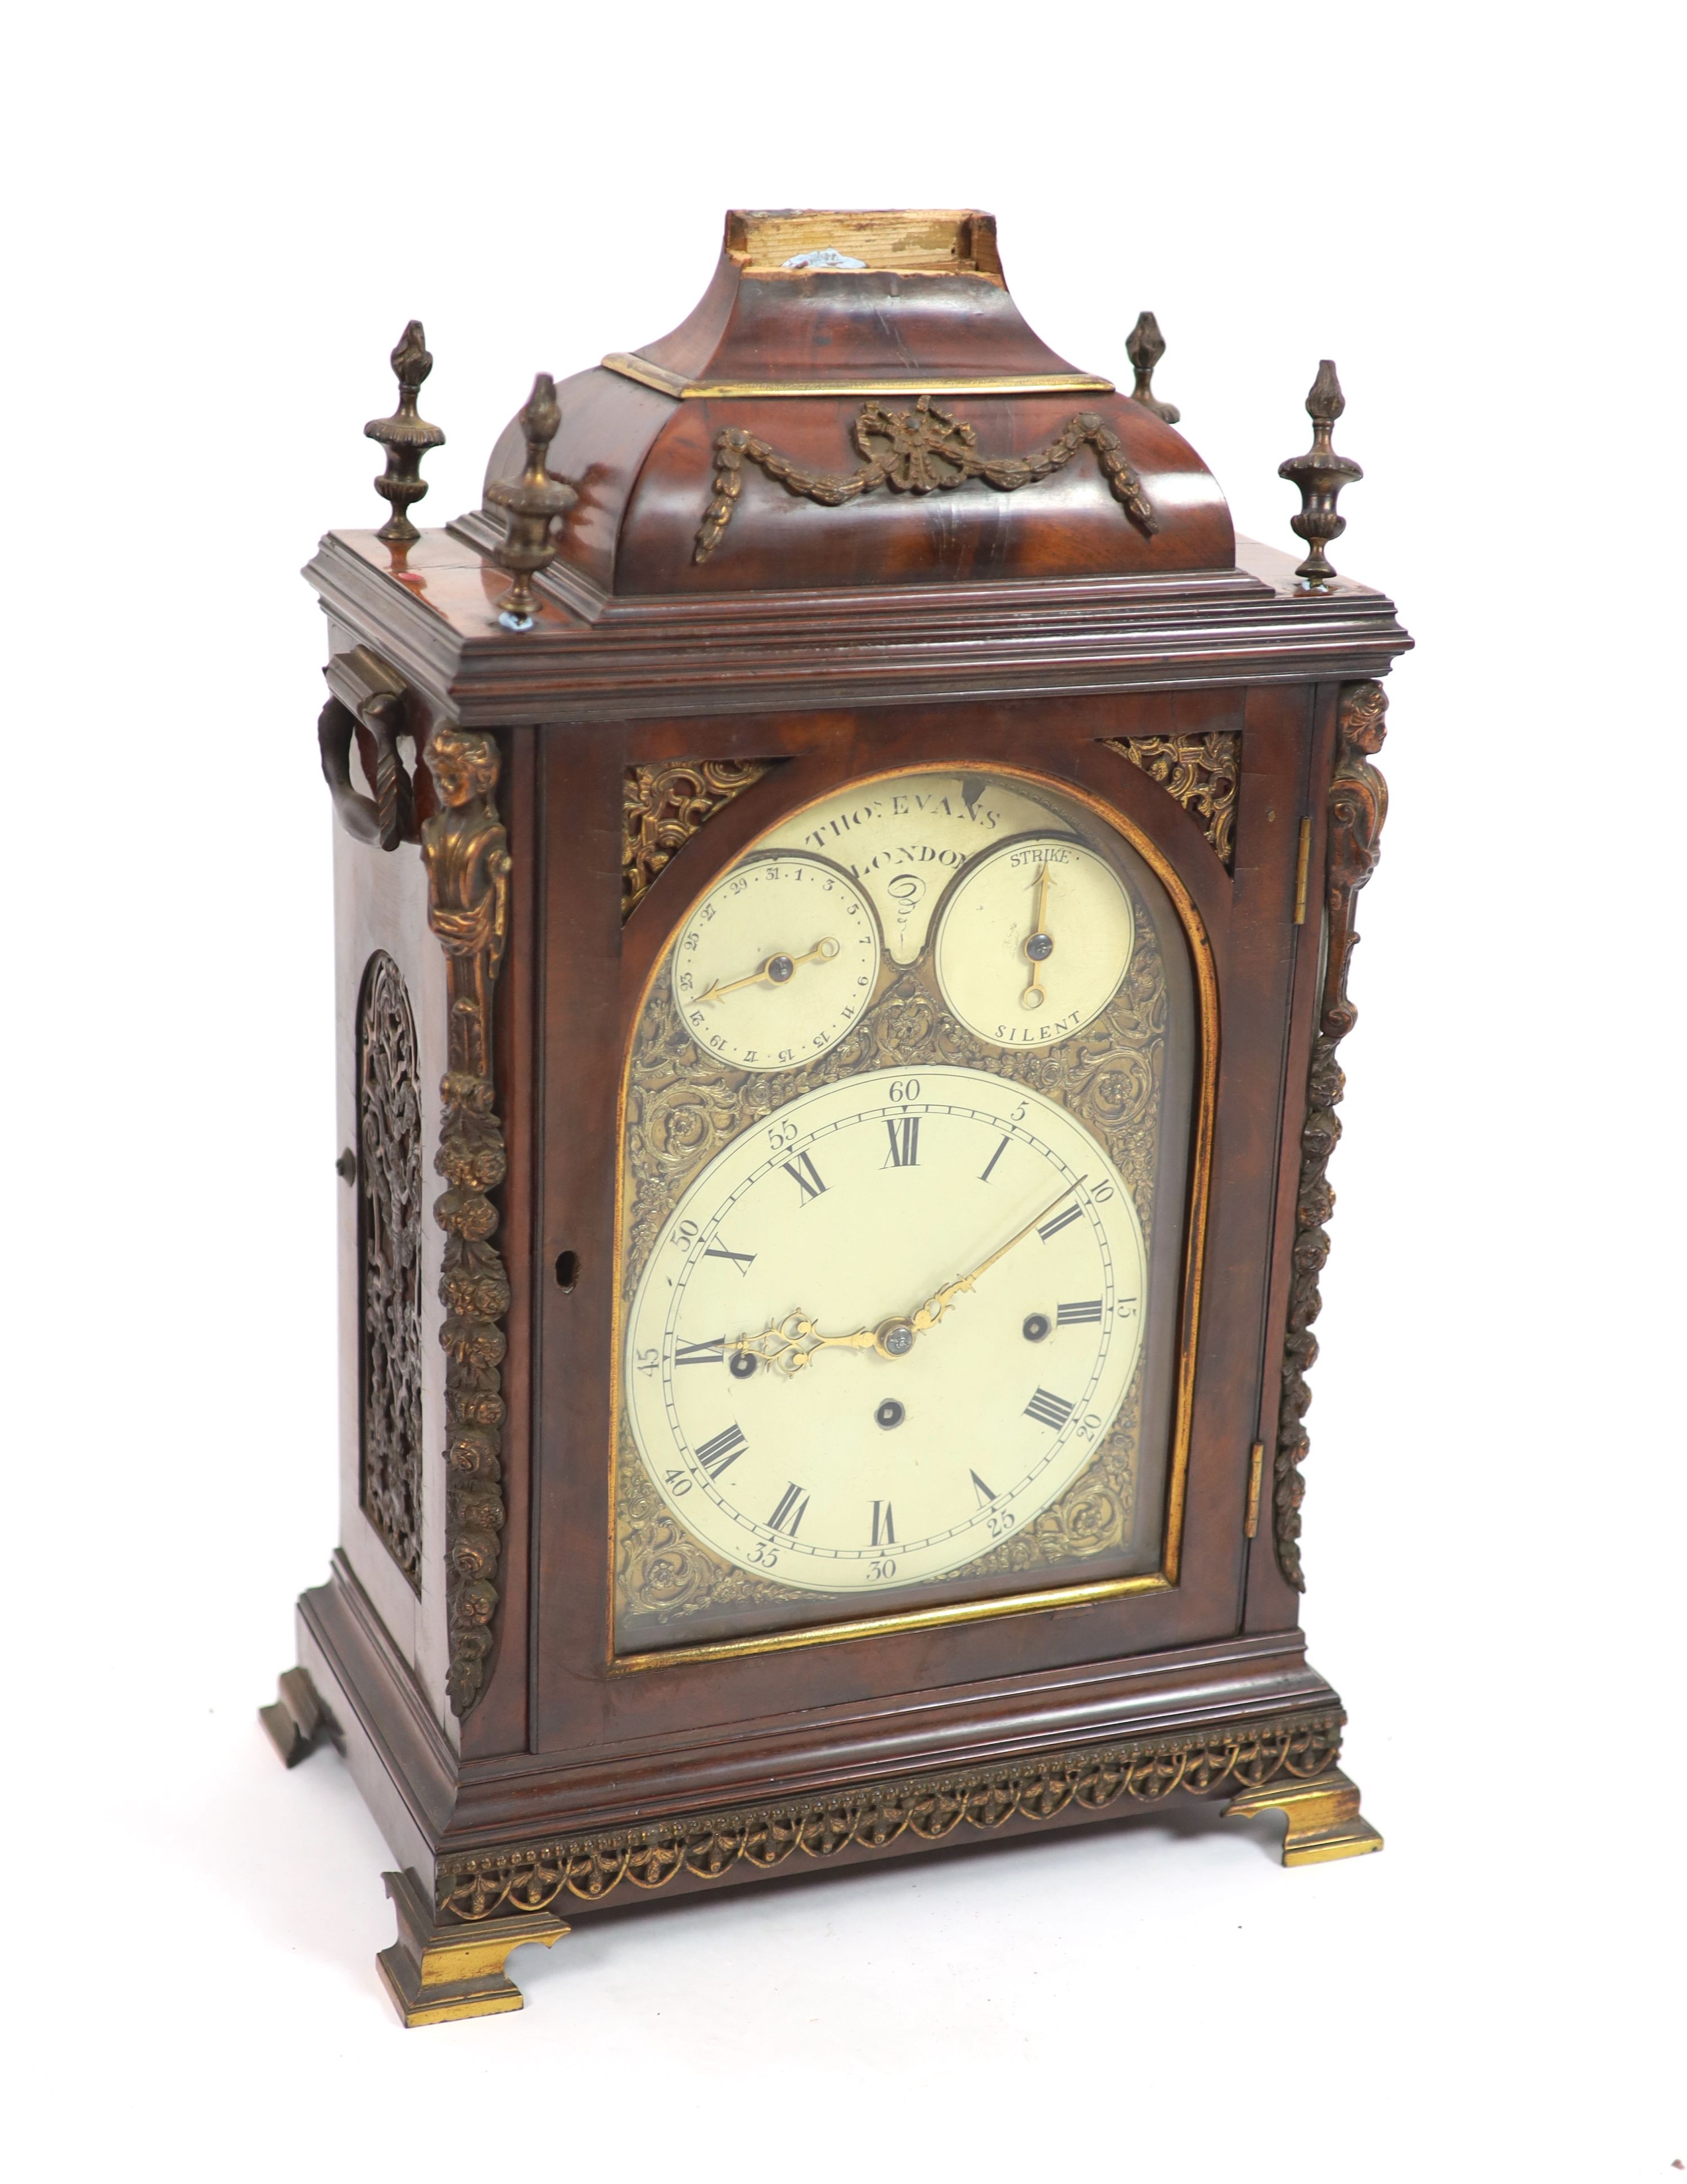 Thomas Evans of London. A George III ormolu mounted mahogany chiming bracket clock, depth 23cm width 38cm height 73cm, with original wall bracket 40cm